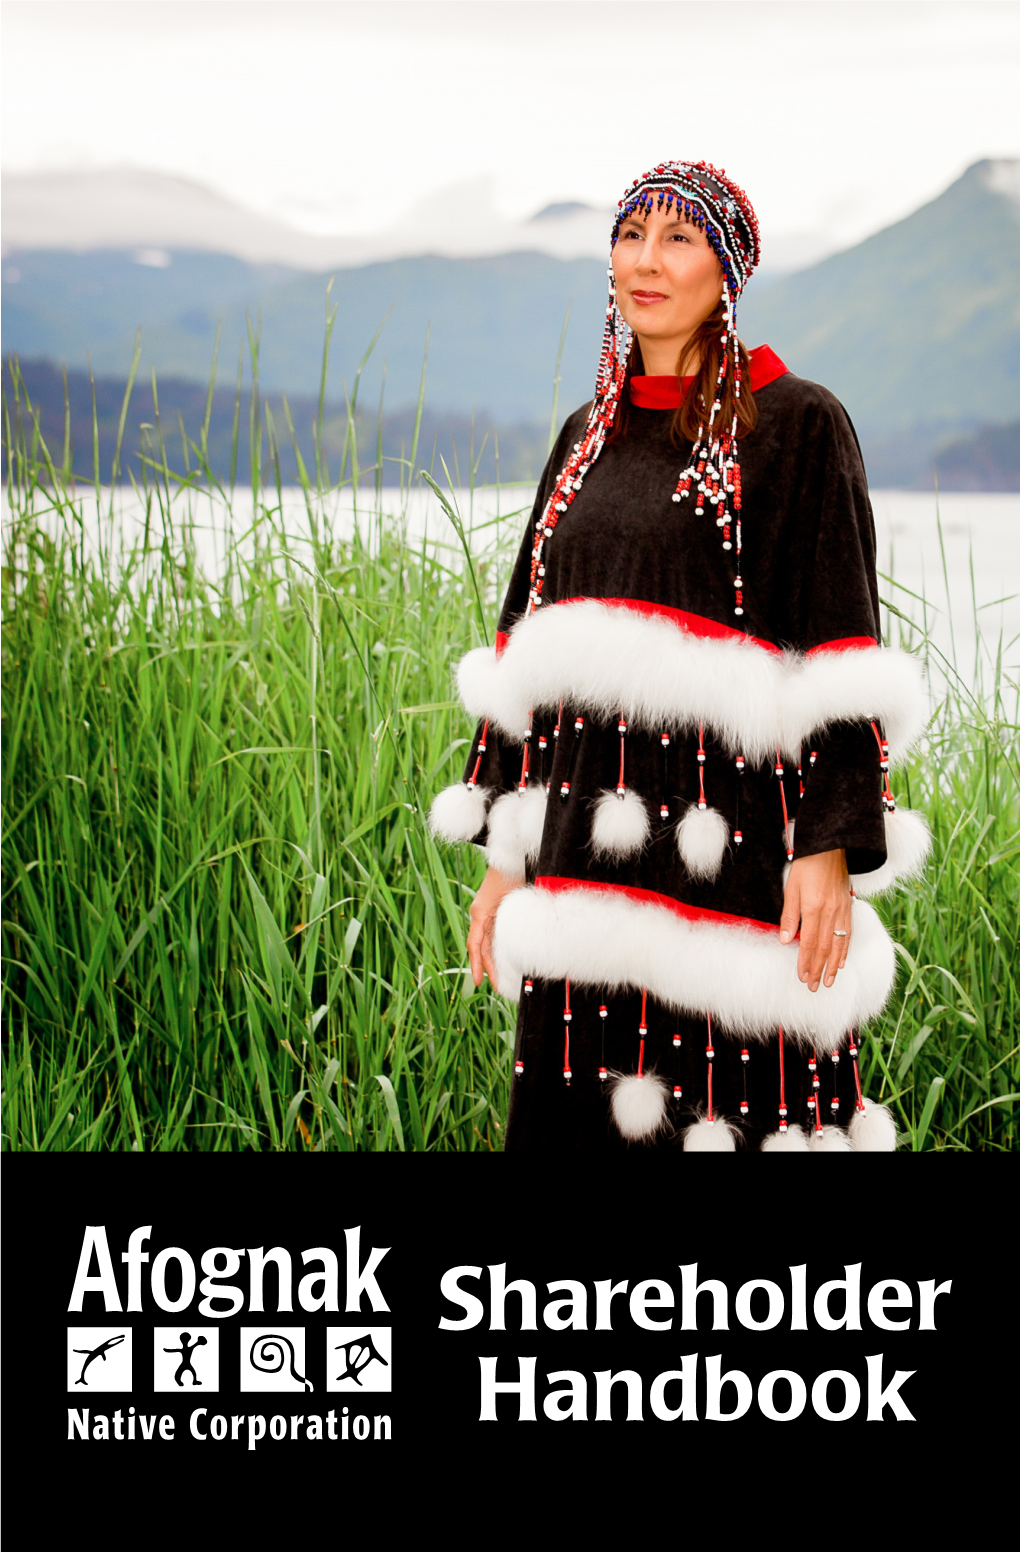 Shareholder Handbook About Afognak Native Corporation